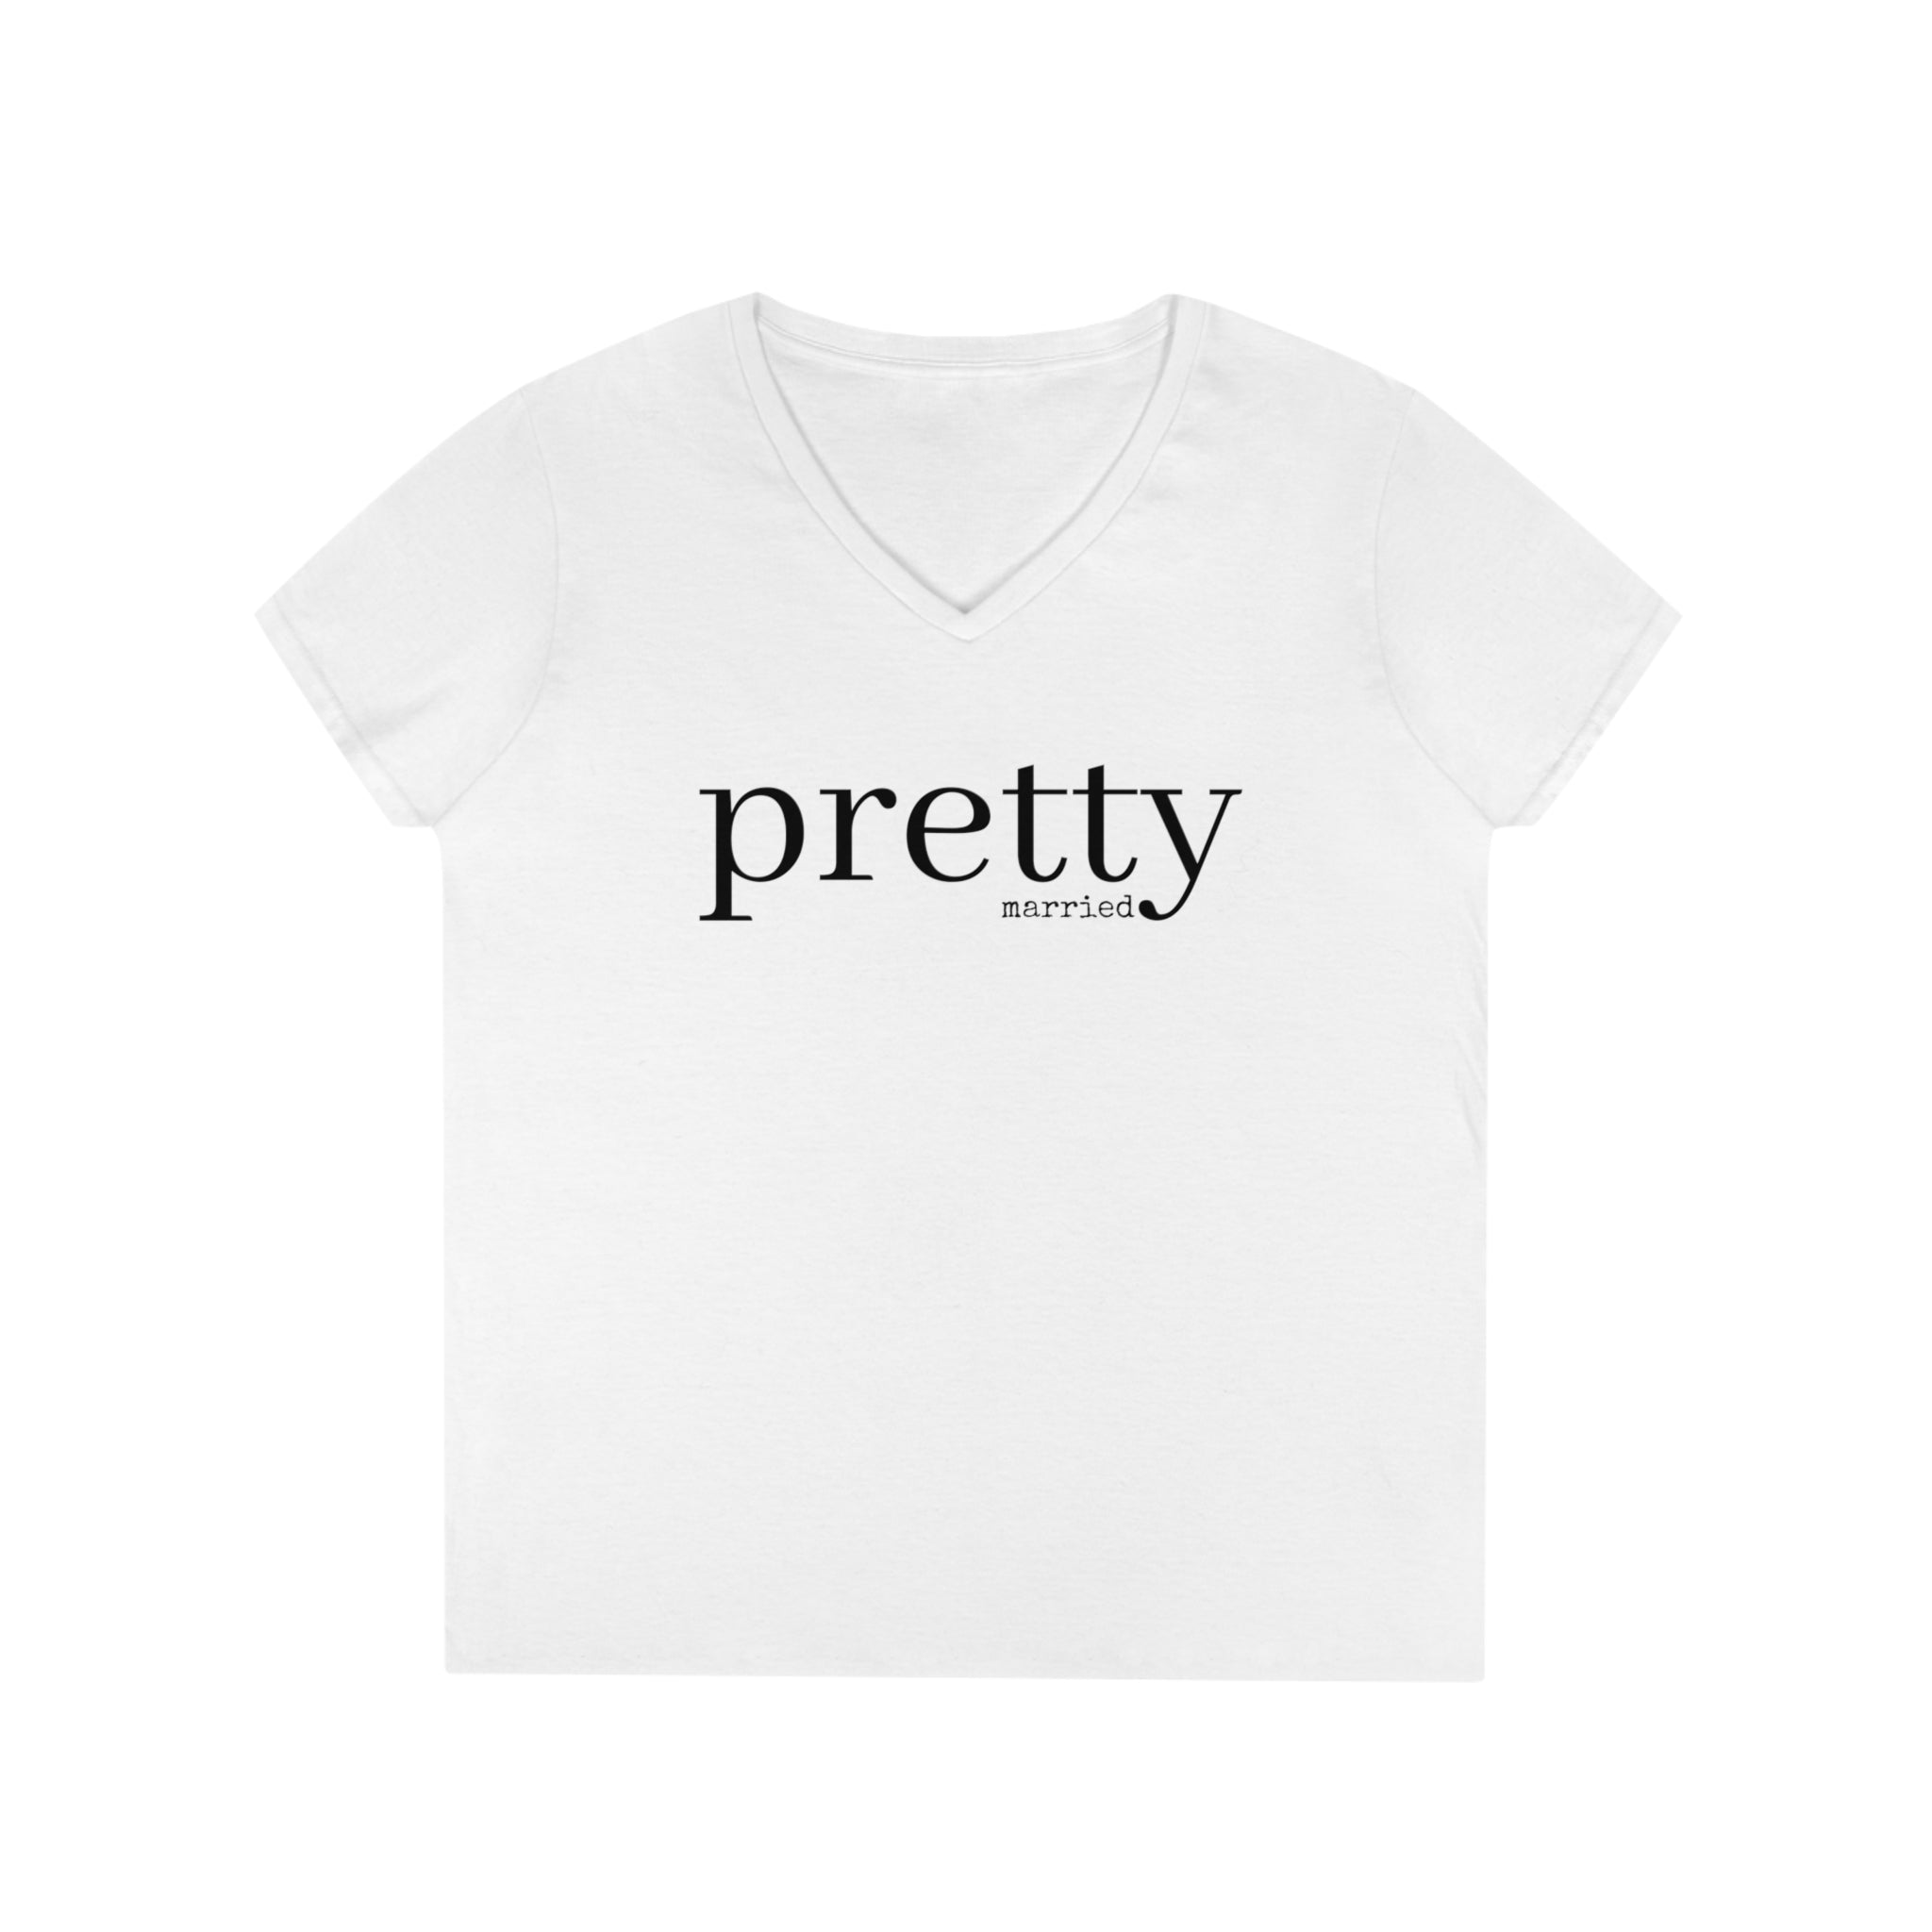  PRETTY married Women's V Neck T-shirt, Cute Graphic Tee V-neck2XLWhite